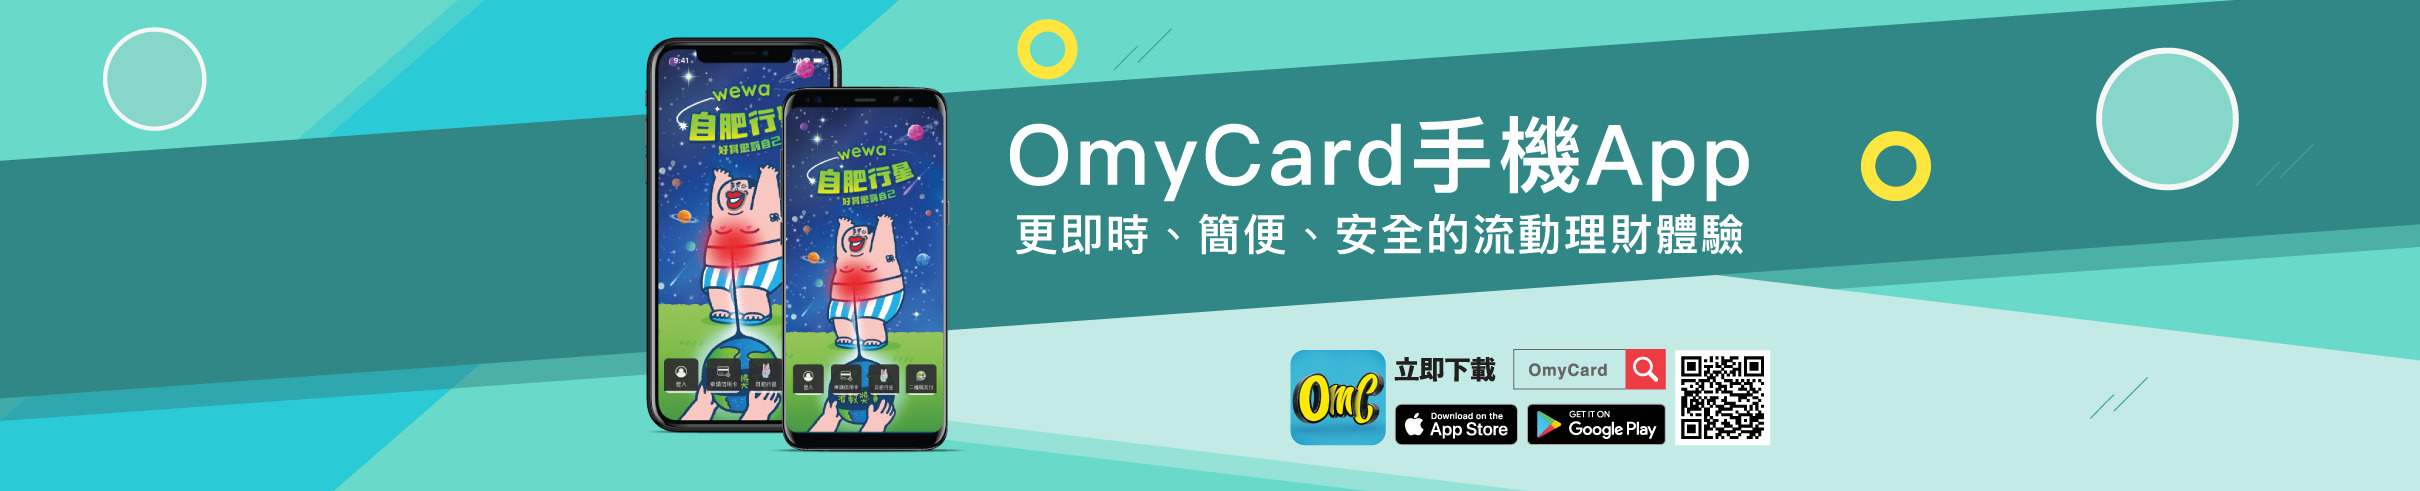 OmyCard 手機App - 更即時、簡便、安全的流動理財體驗